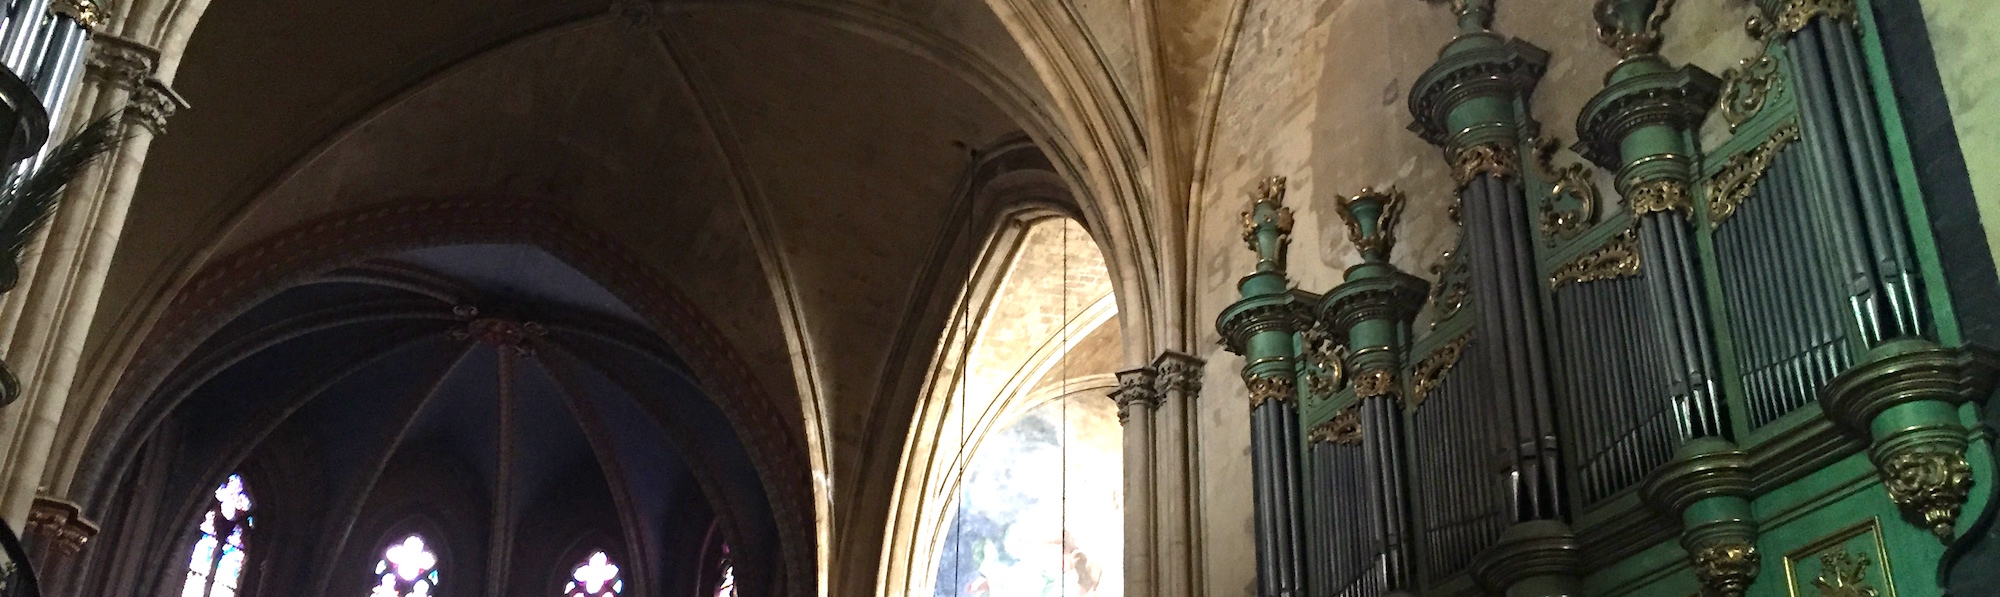 La catedral de Saint-Saveur - Aix en Provence